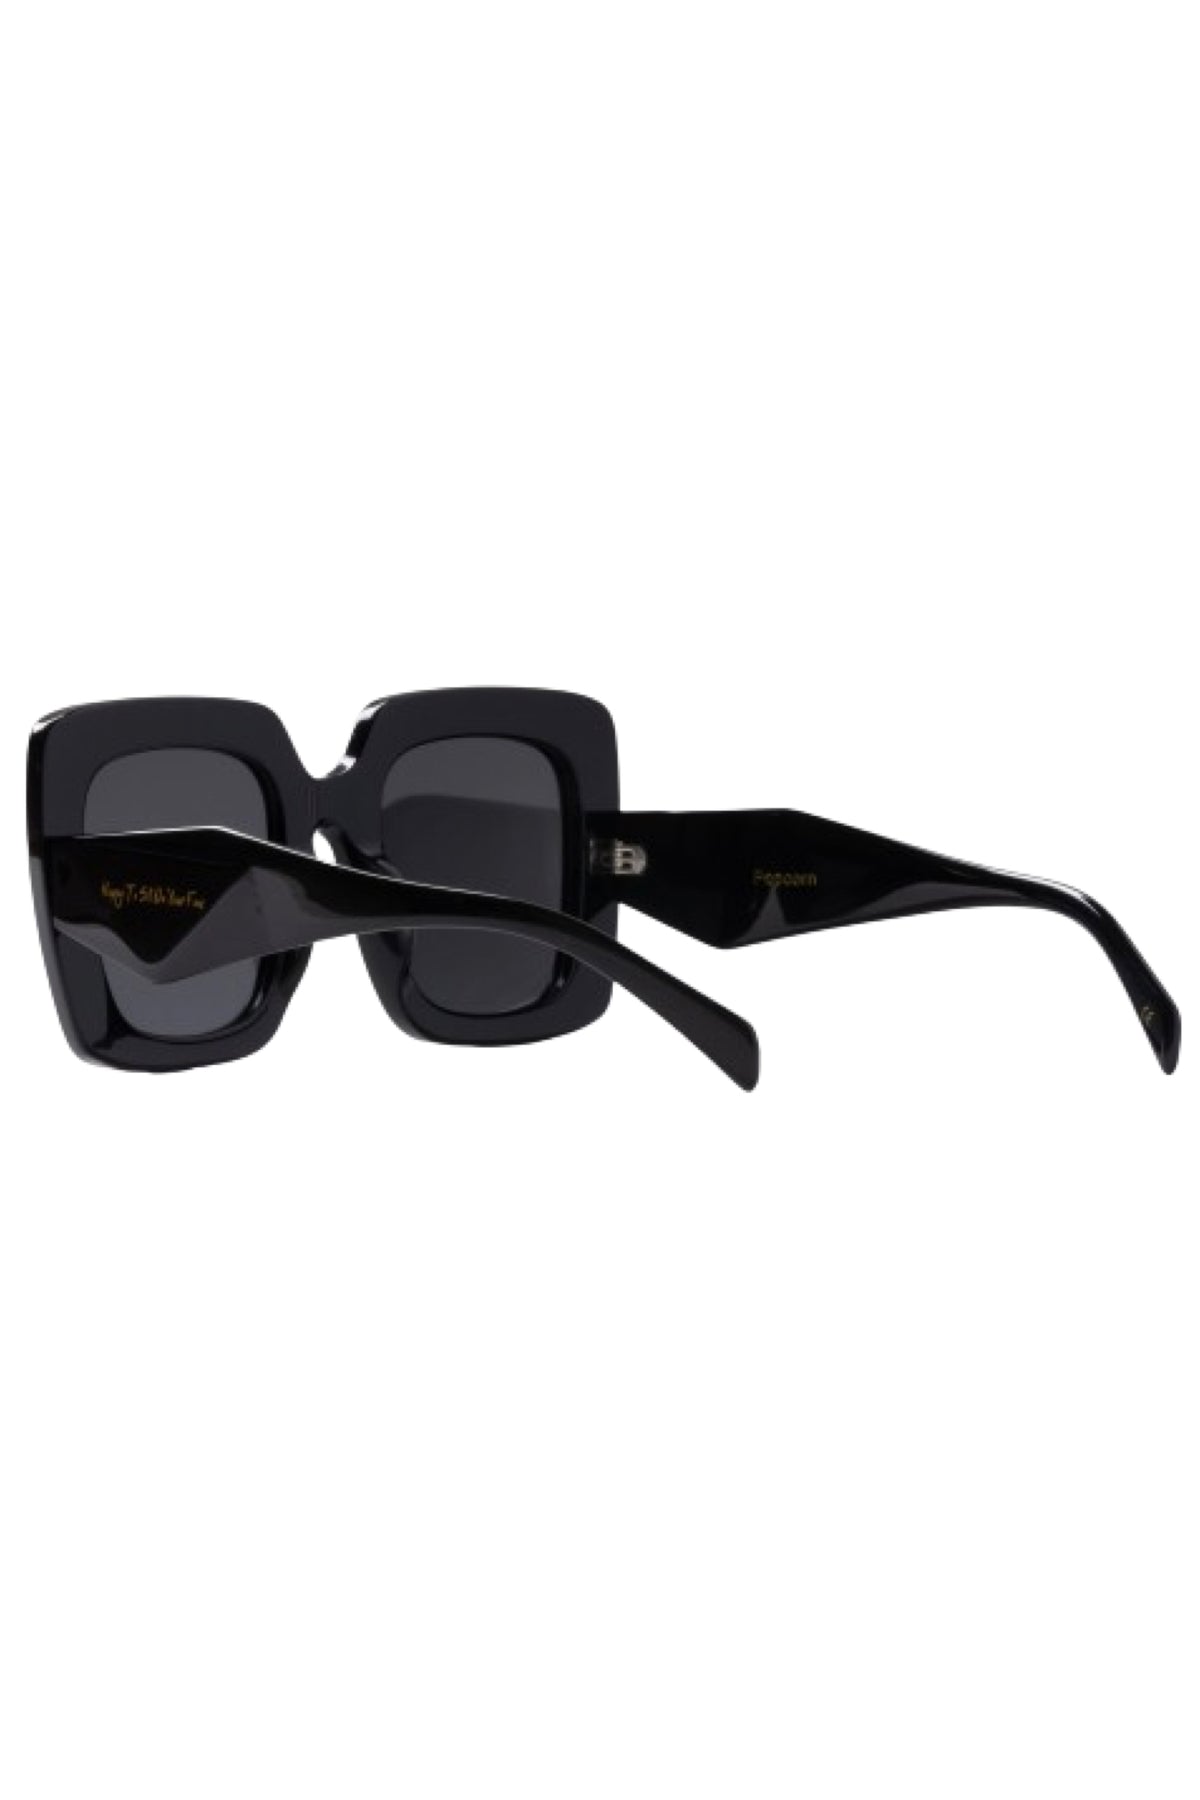 Popcorn Noir Sunglasses